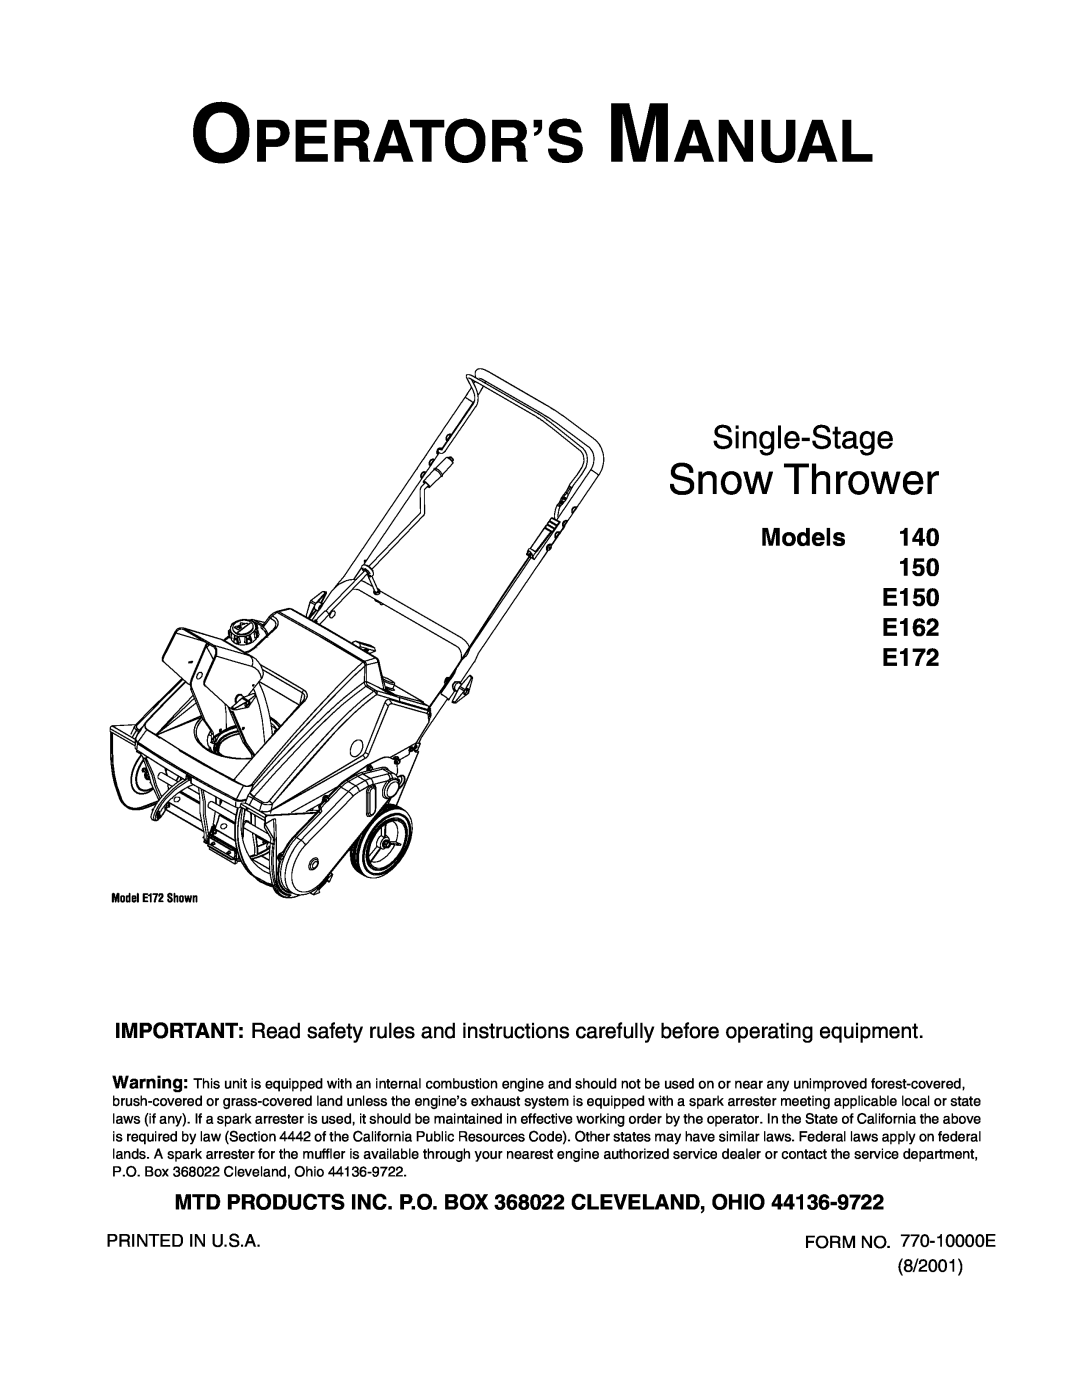 MTD manual Operator’S Manual, Snow Thrower, Single-Stage, Models 140 150 E150 E162 E172 